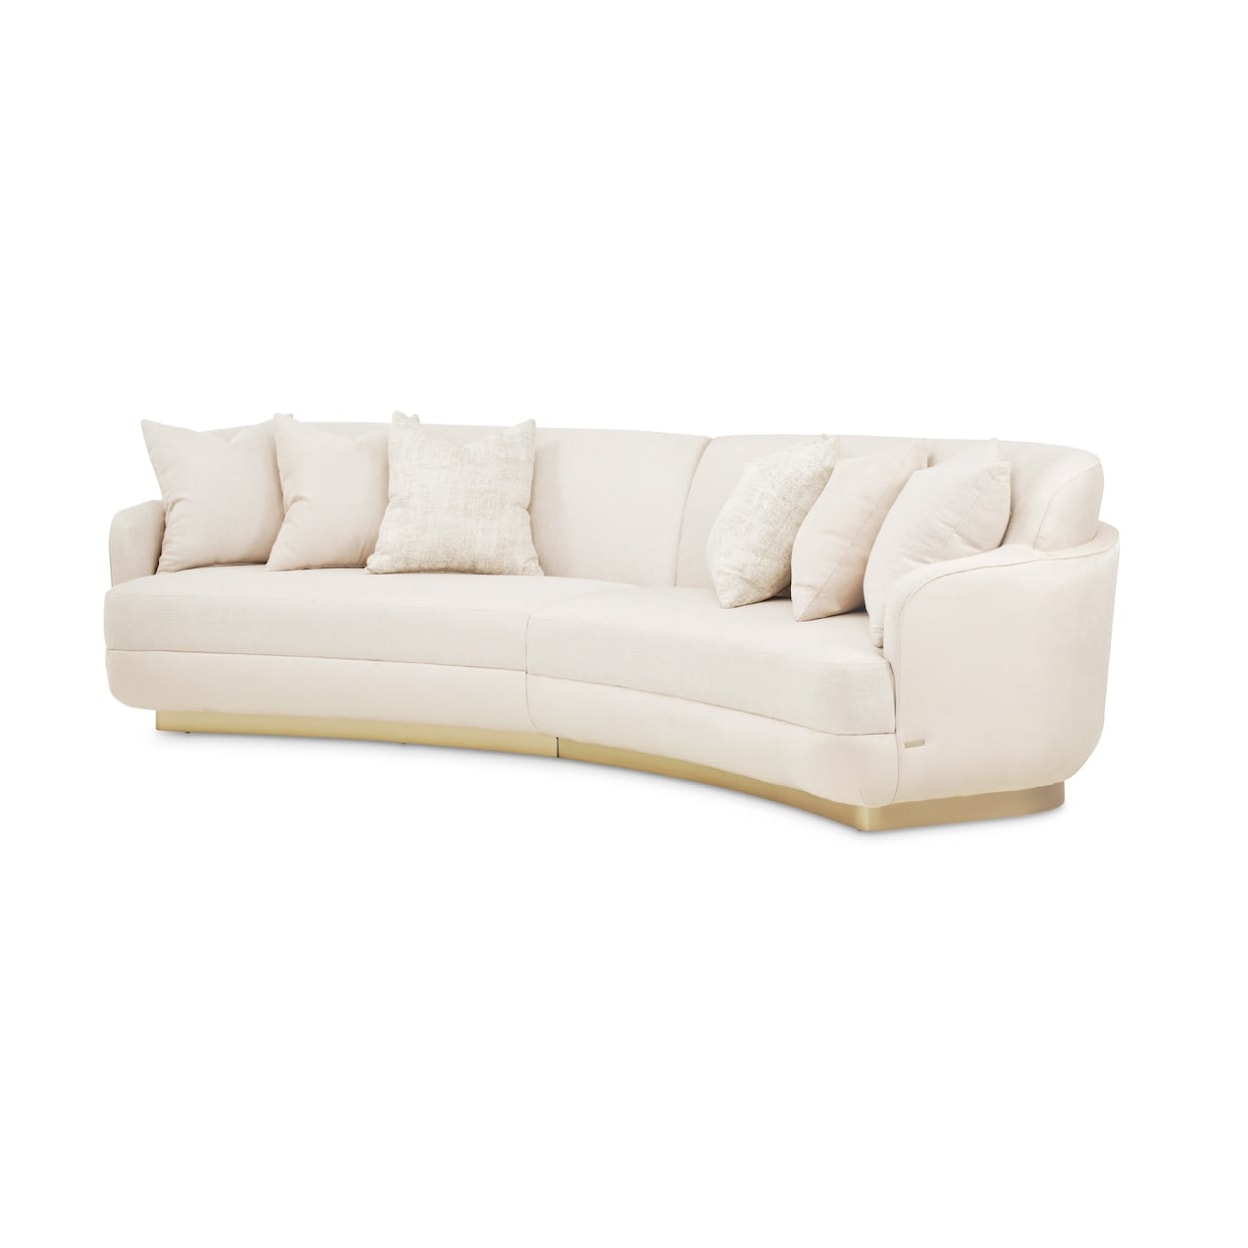 Michael Amini Aurora 2-Piece Upholstered Sectional Sofa